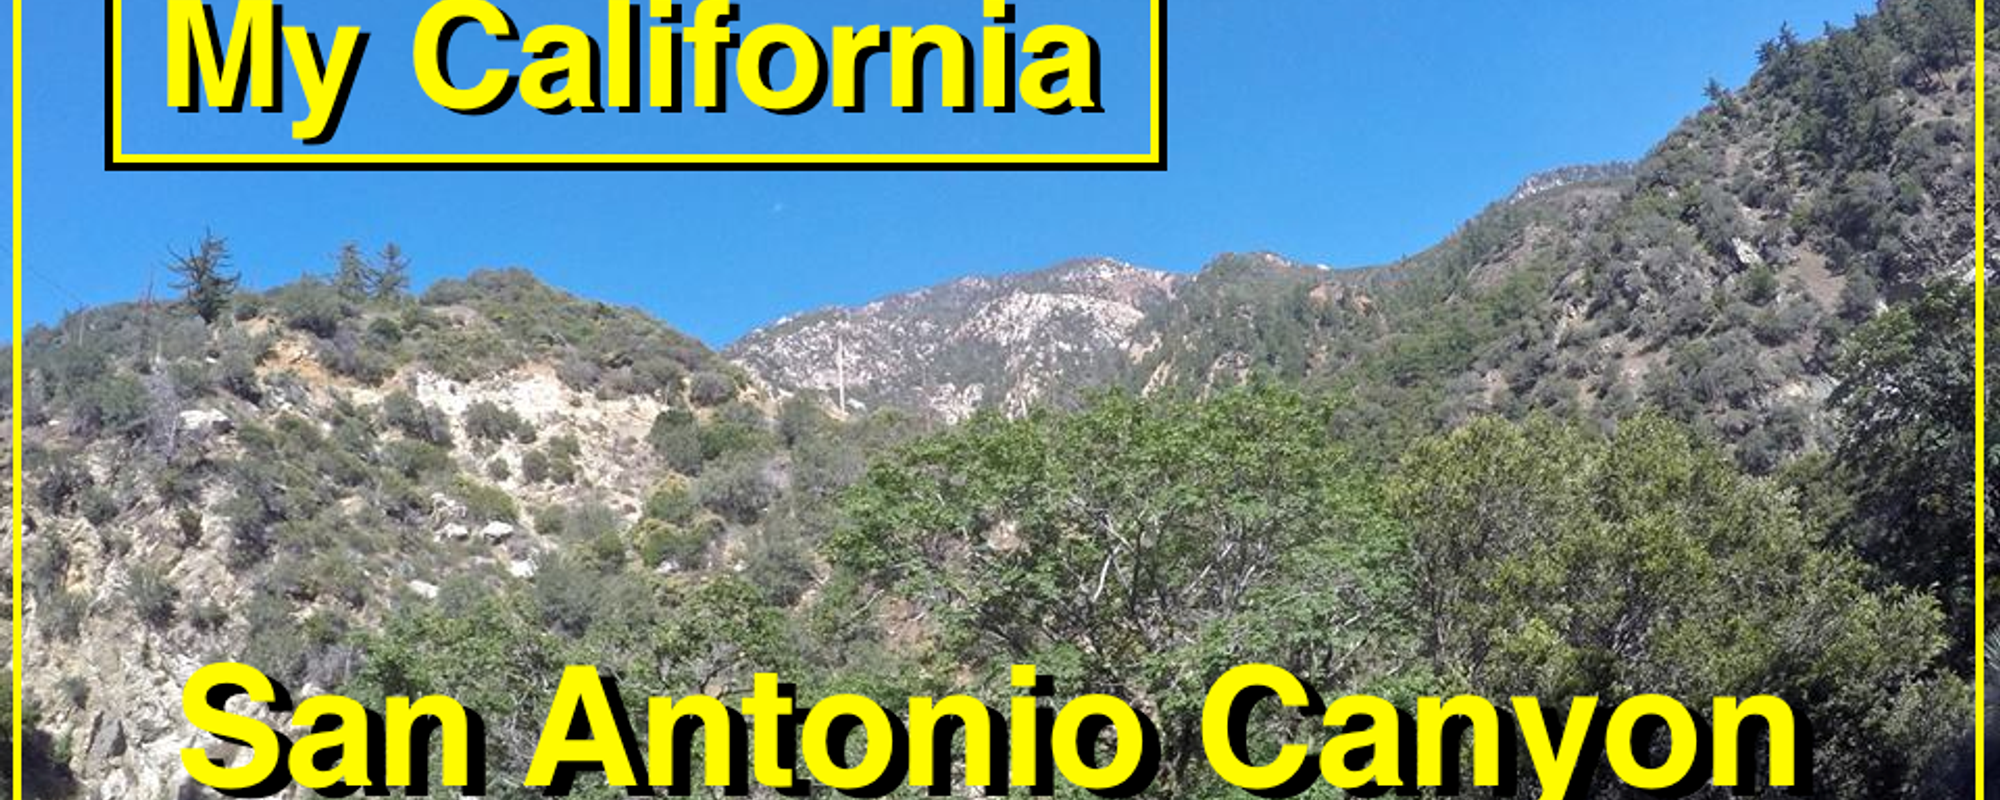 My California - San Antonio Canyon